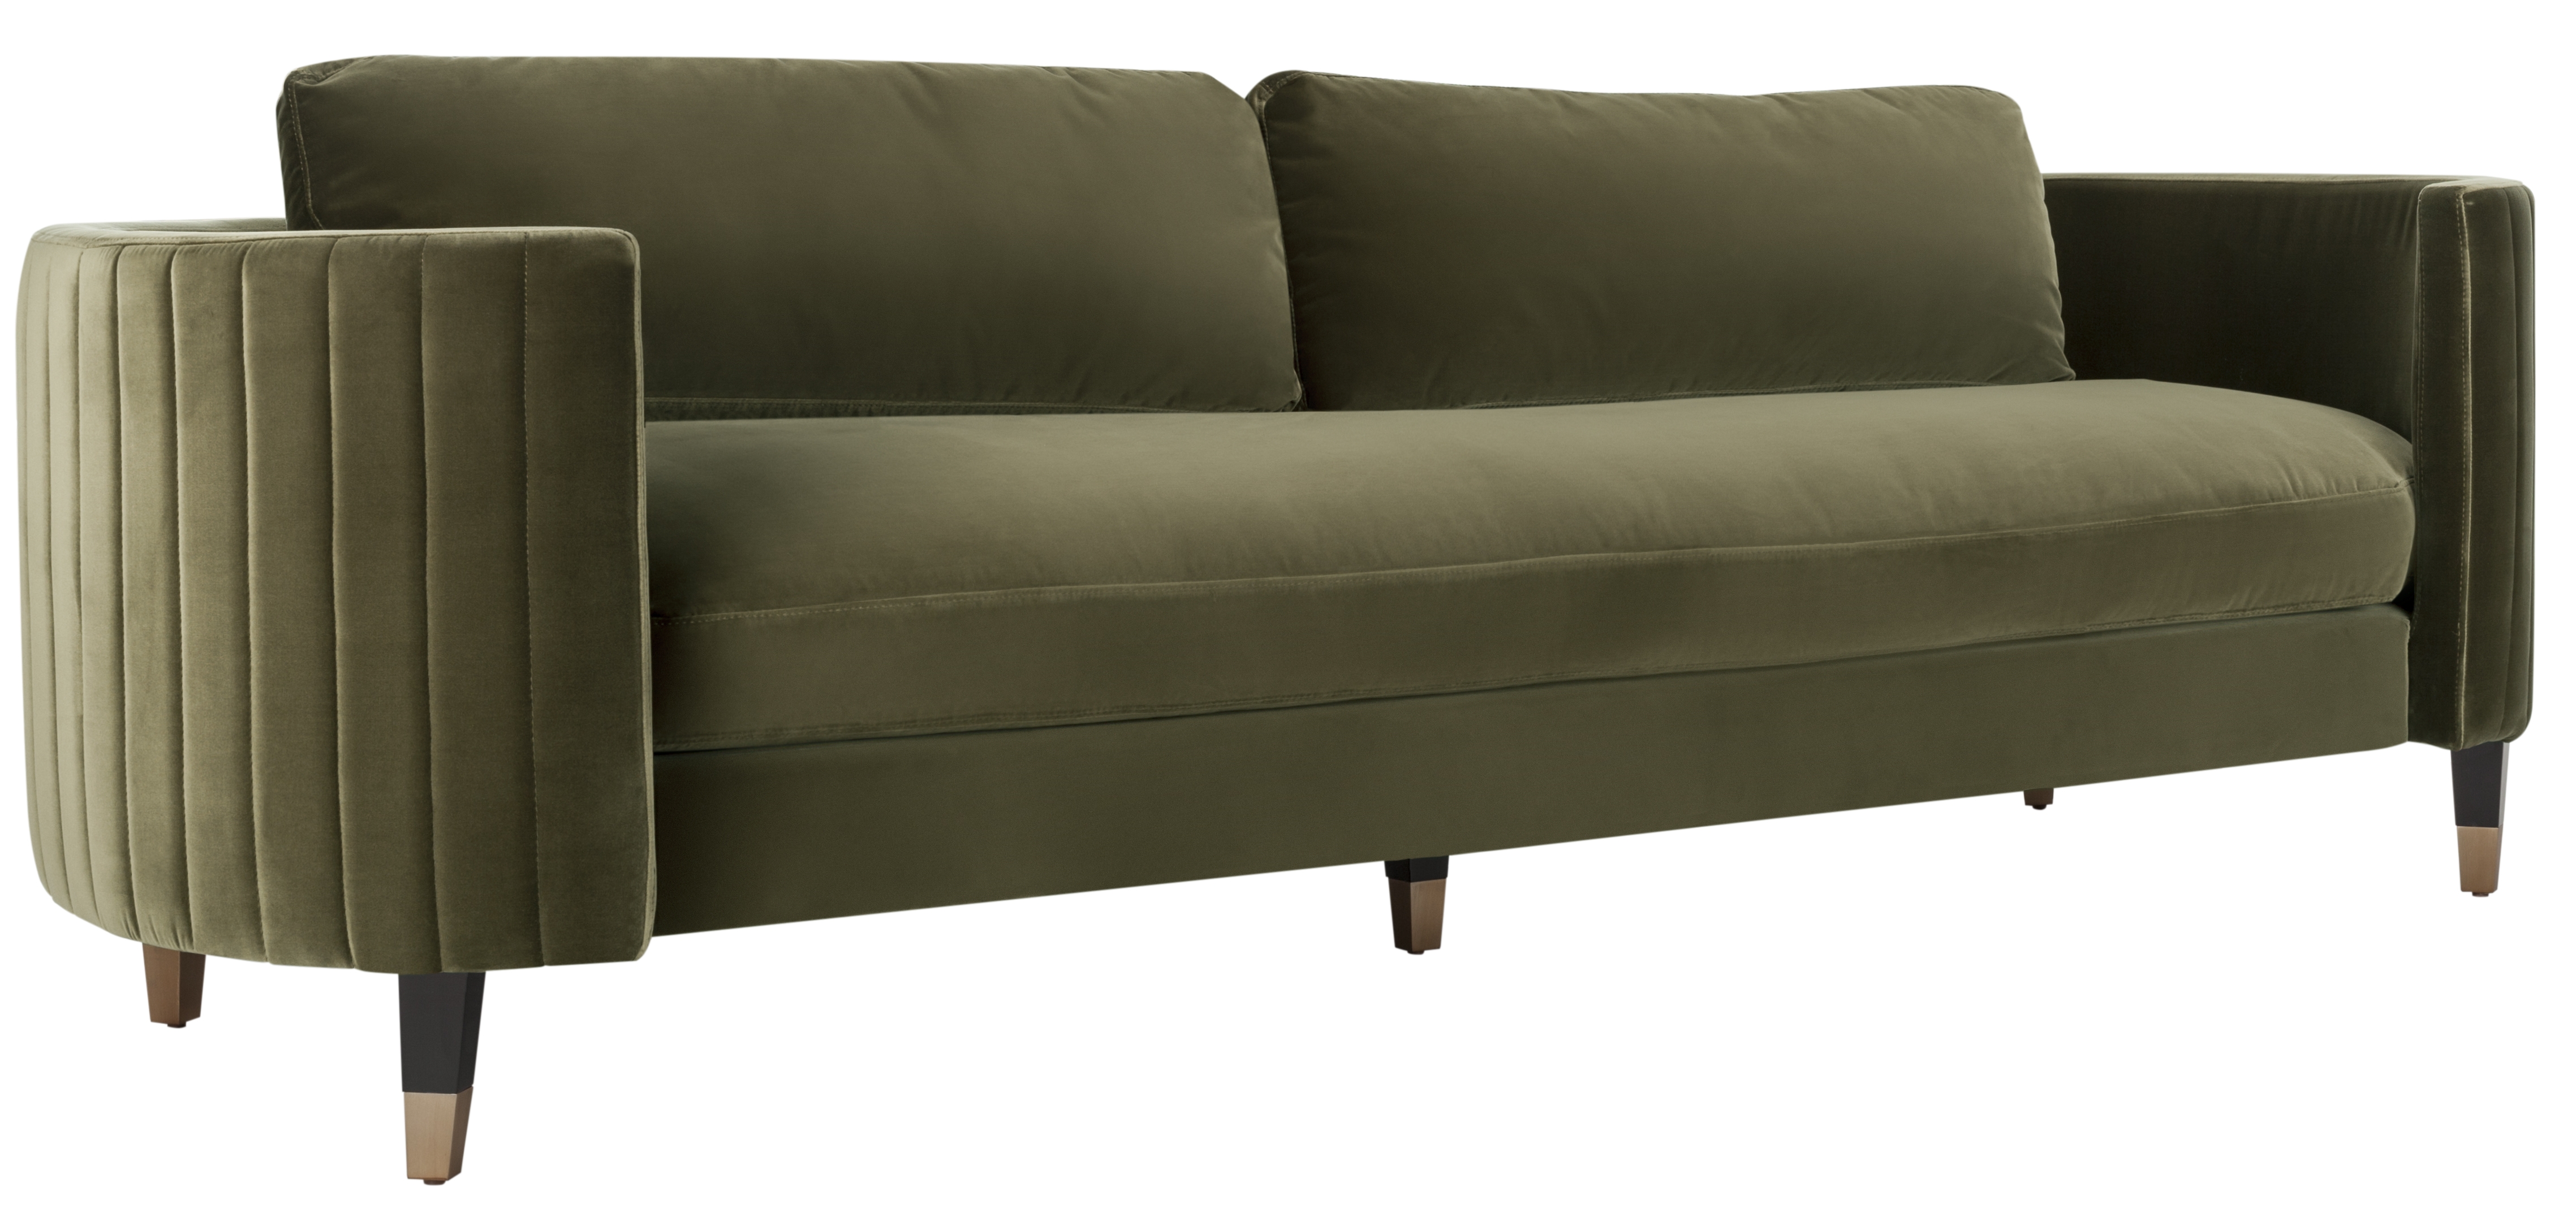 Odette Velvet Sofa, Giotto Dark Olive Green - Image 1